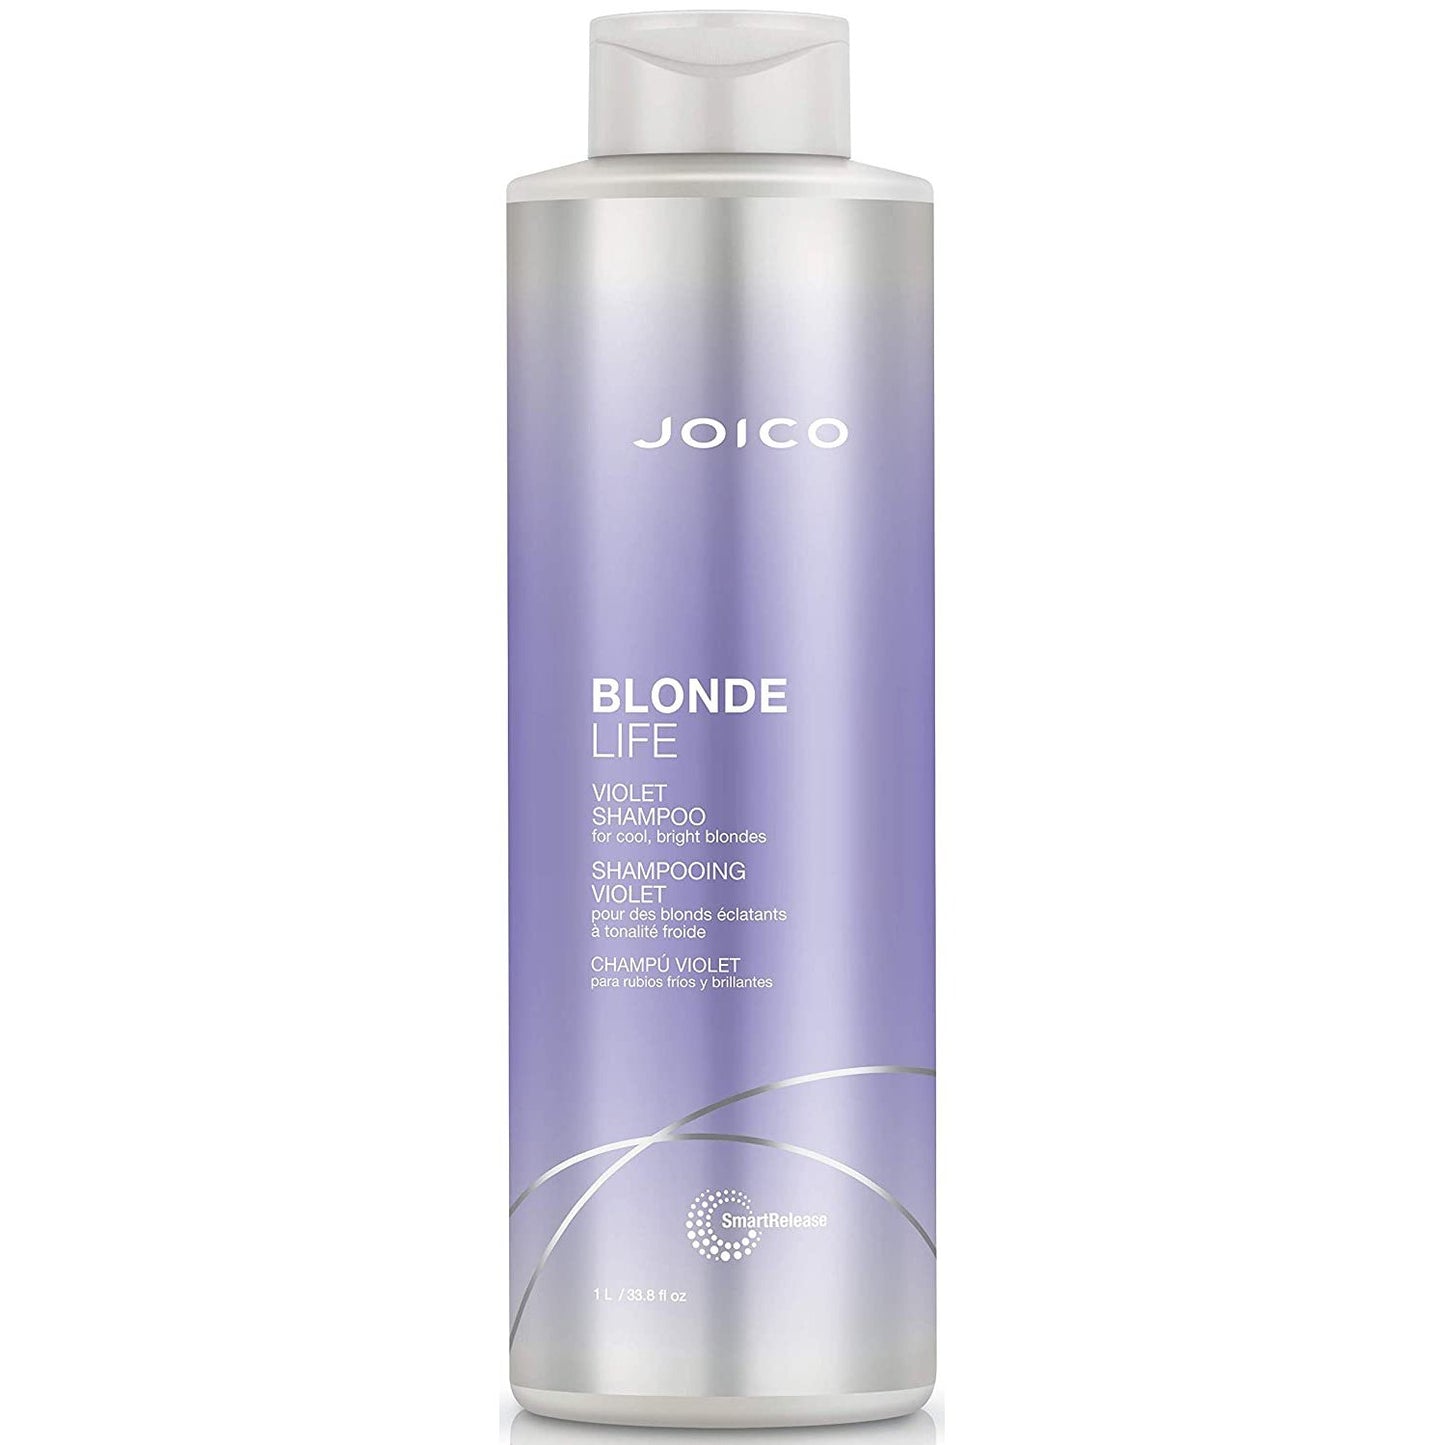 Joico Blonde Life Violet Shampoo 33.8 oz